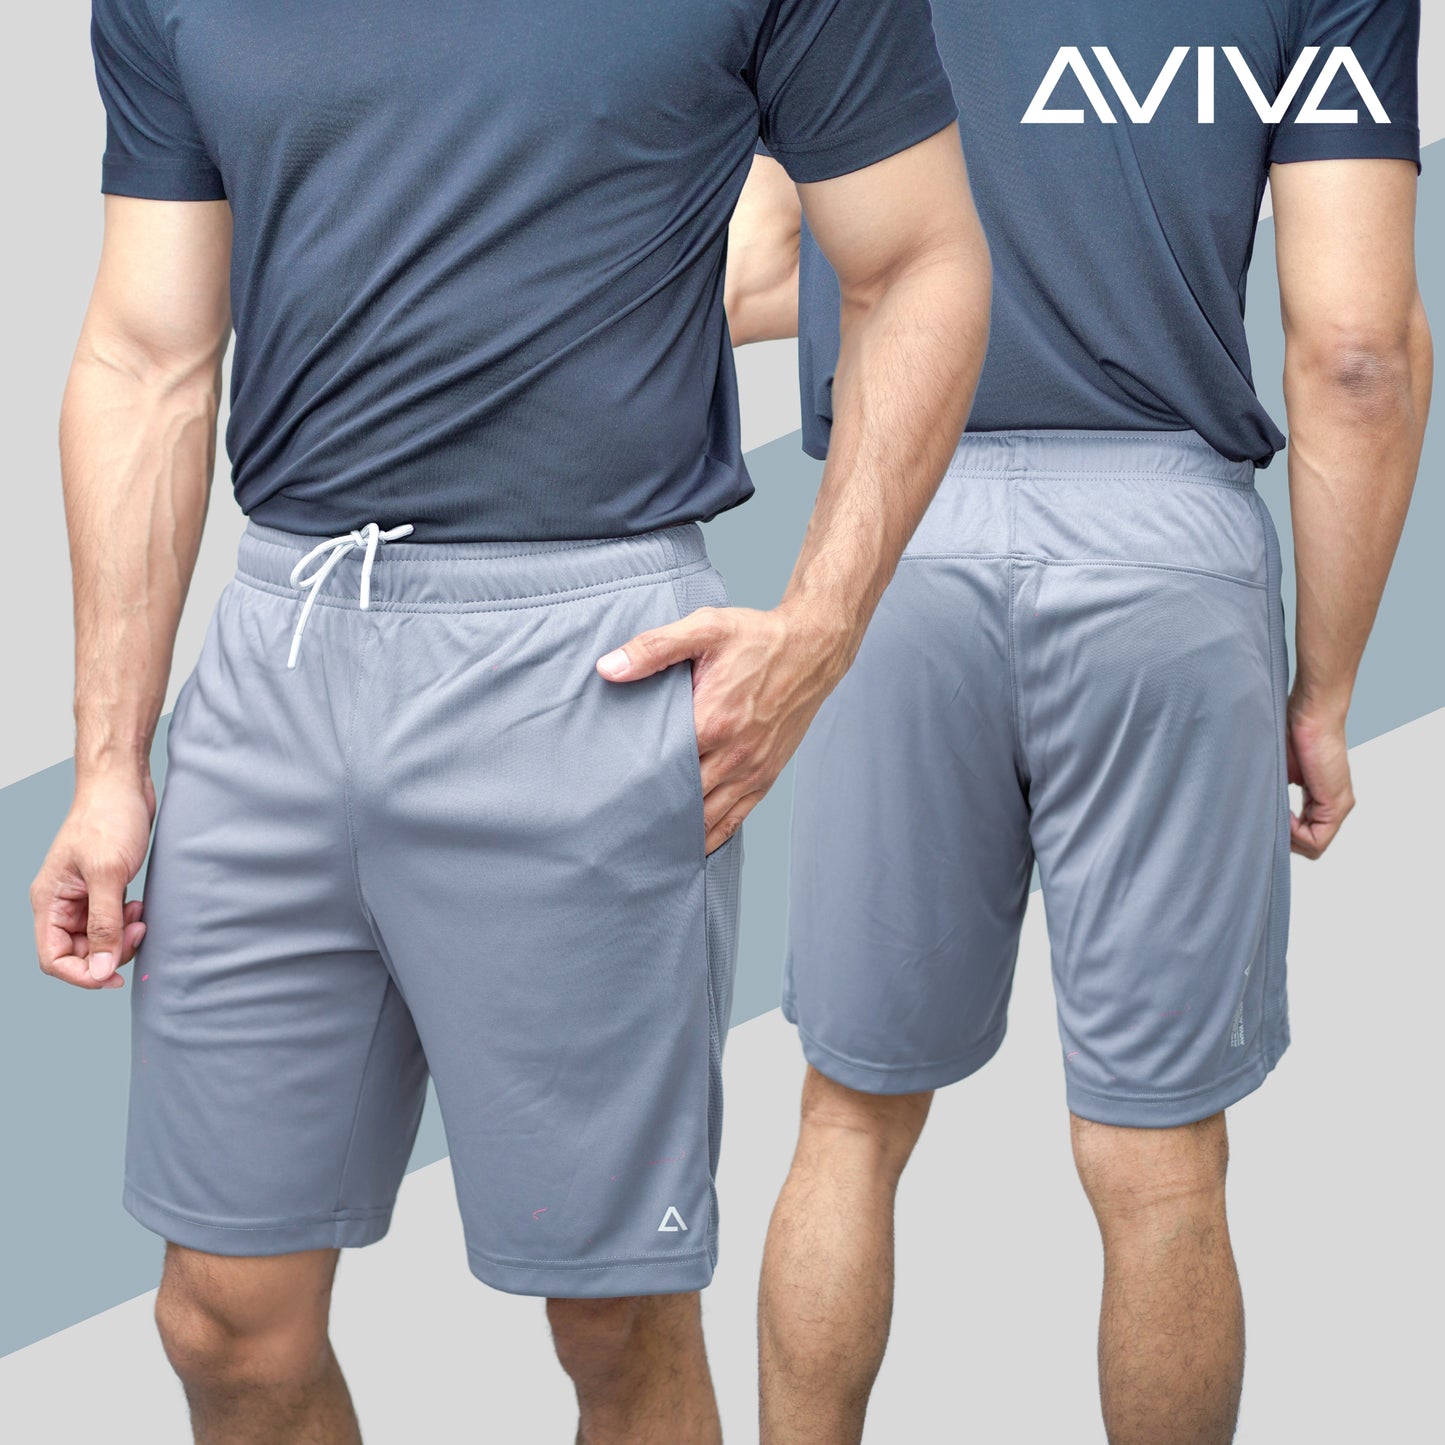 Aviva Max Men's Short Pant (91-2019)